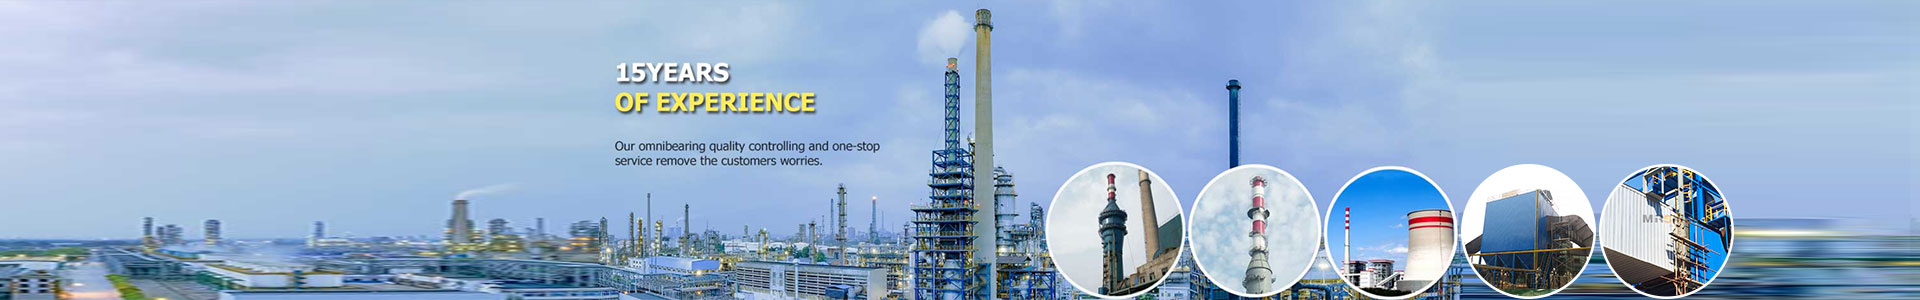 Flue gas whitening-Shandong Mingsheng Environmental Protection Technology Co.,Ltd